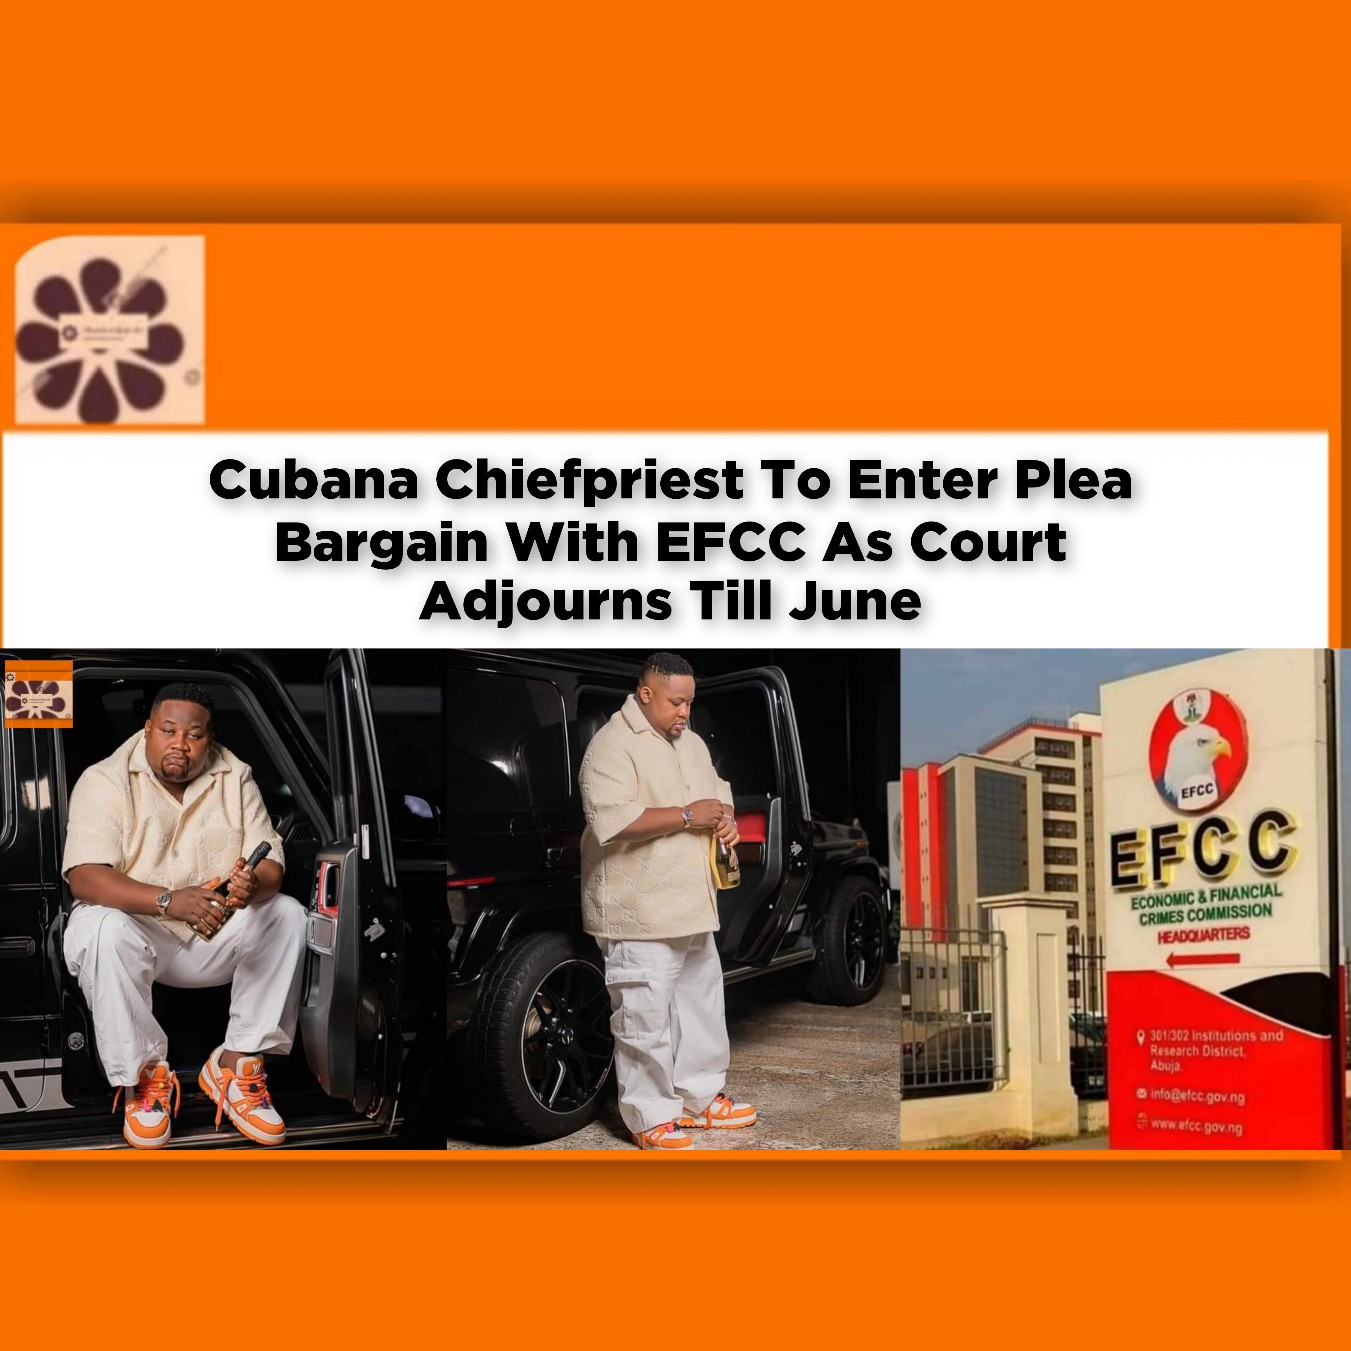 Cubana Chiefpriest To Enter Plea Bargain With EFCC As Court Adjourns Till June ~ OsazuwaAkonedo #army